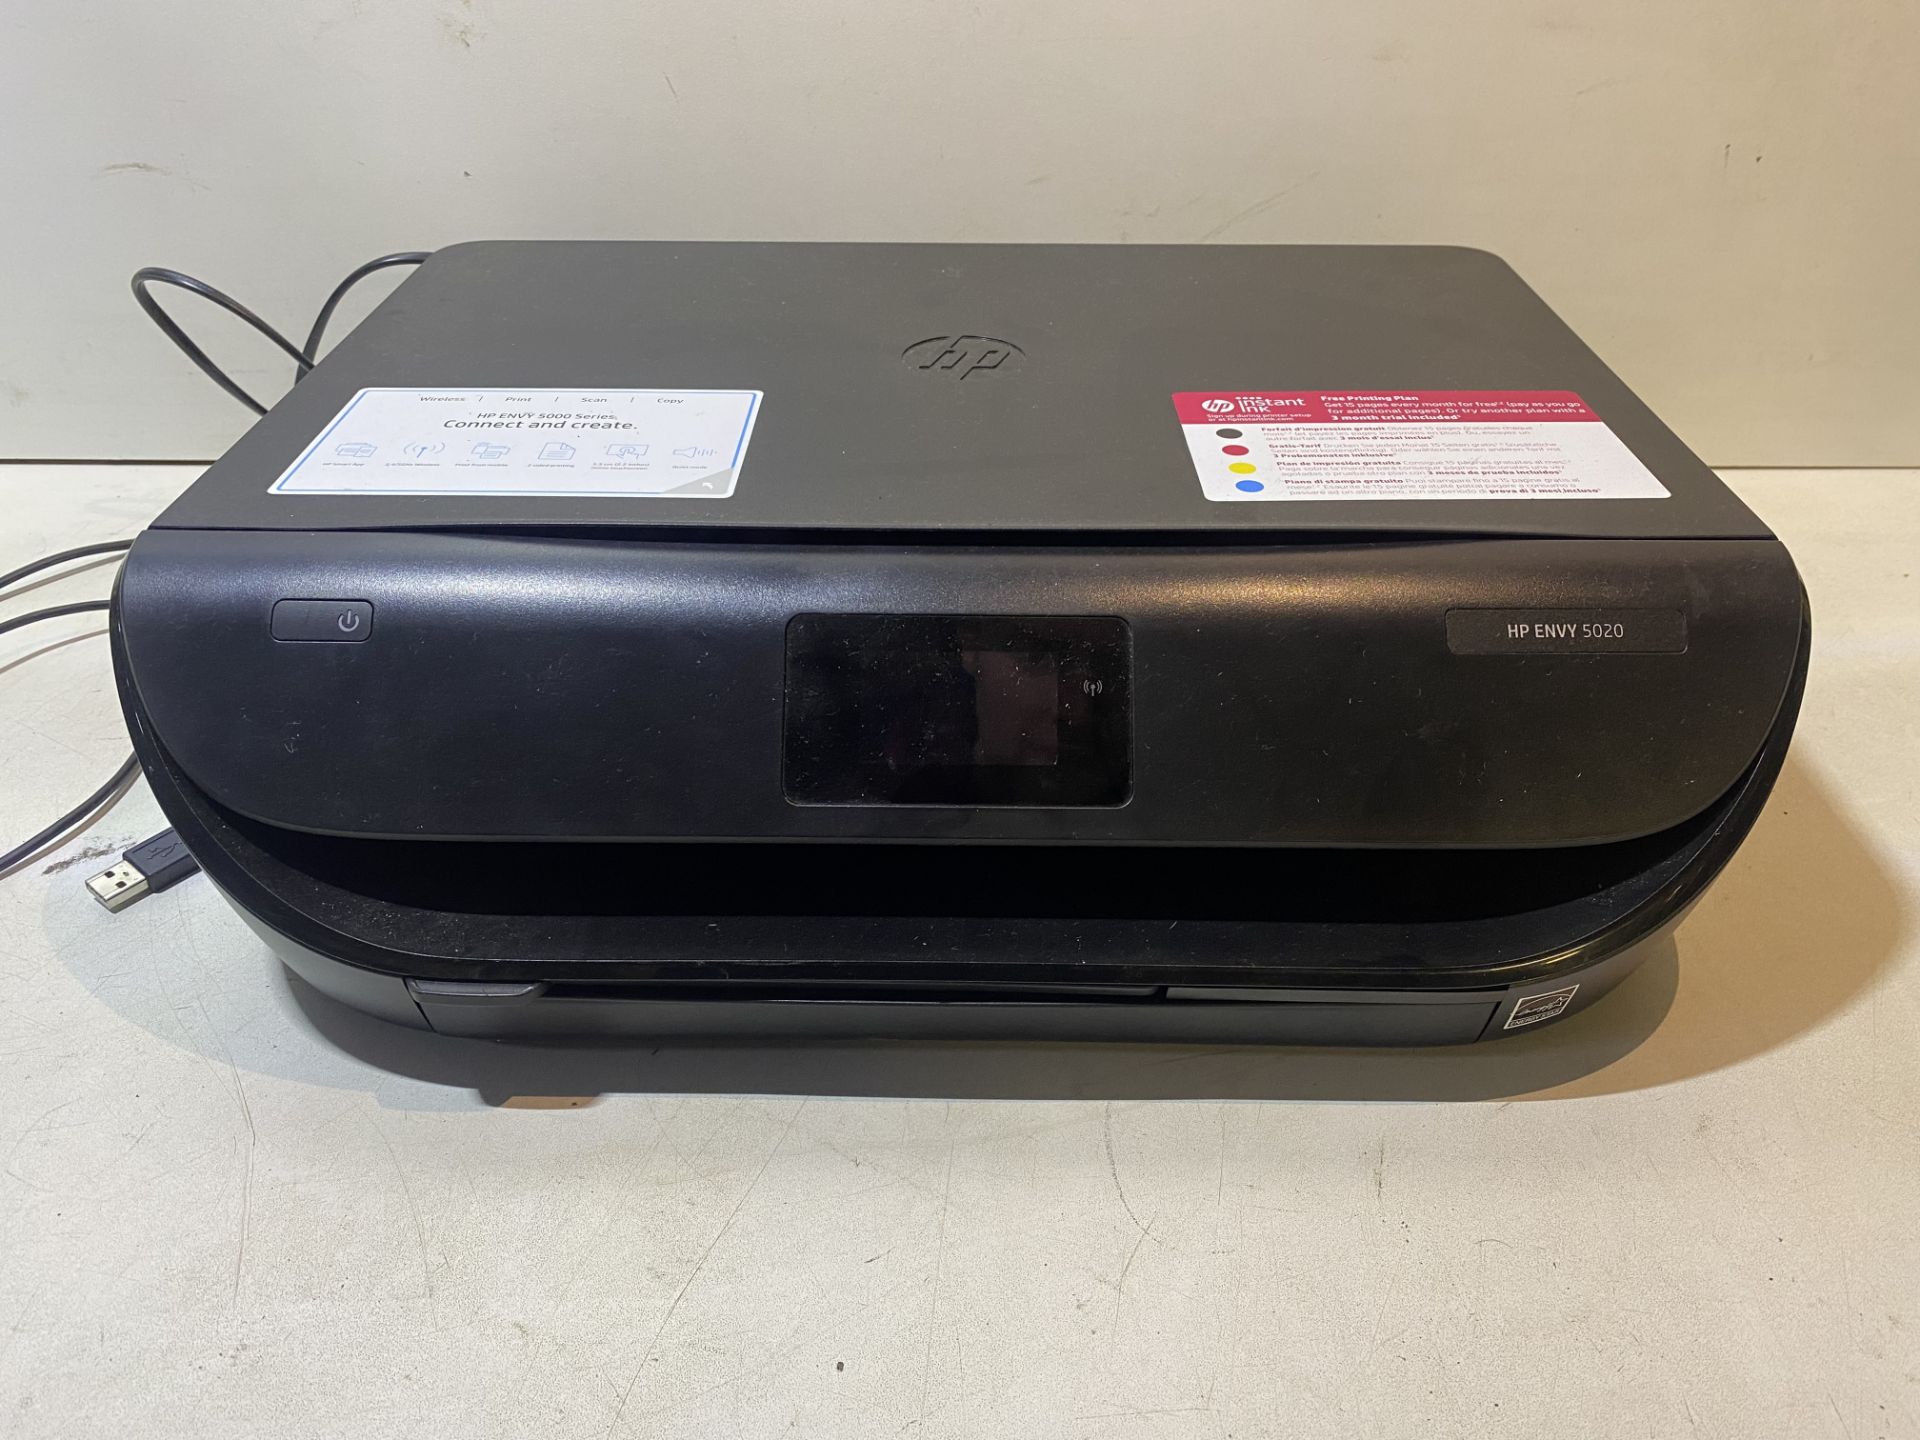 HP ENVY 5020 All-in-One Printer - Bild 2 aus 9